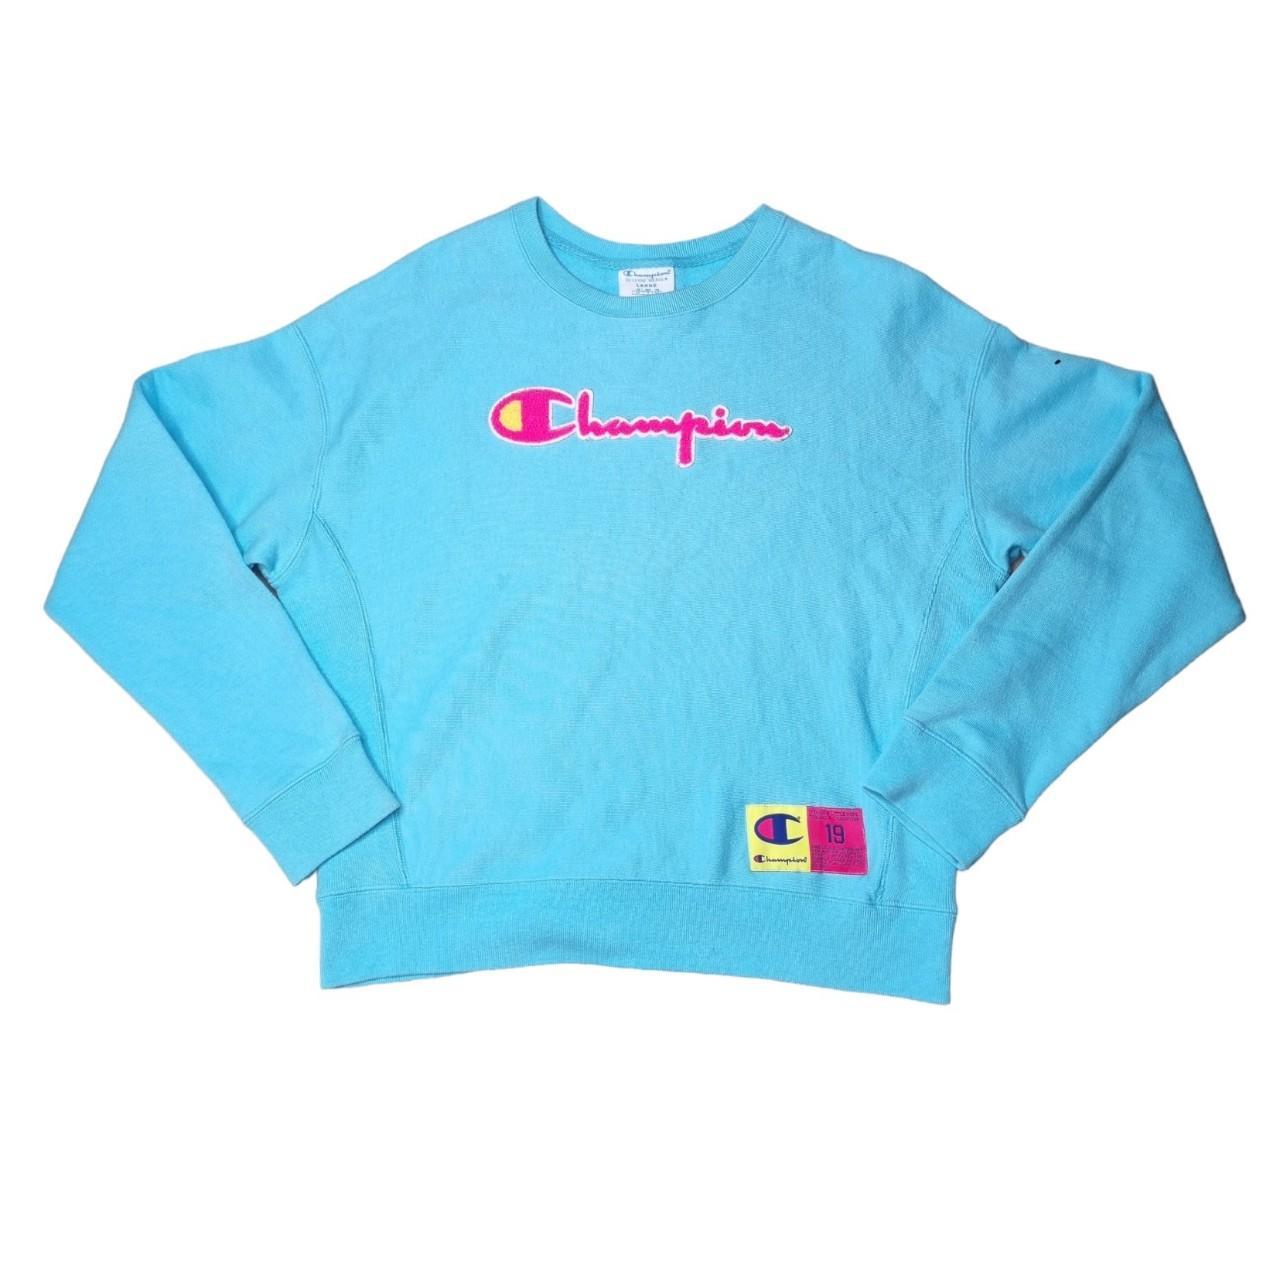 Blue Champion reverse weave sweatshirt with pink... - Depop